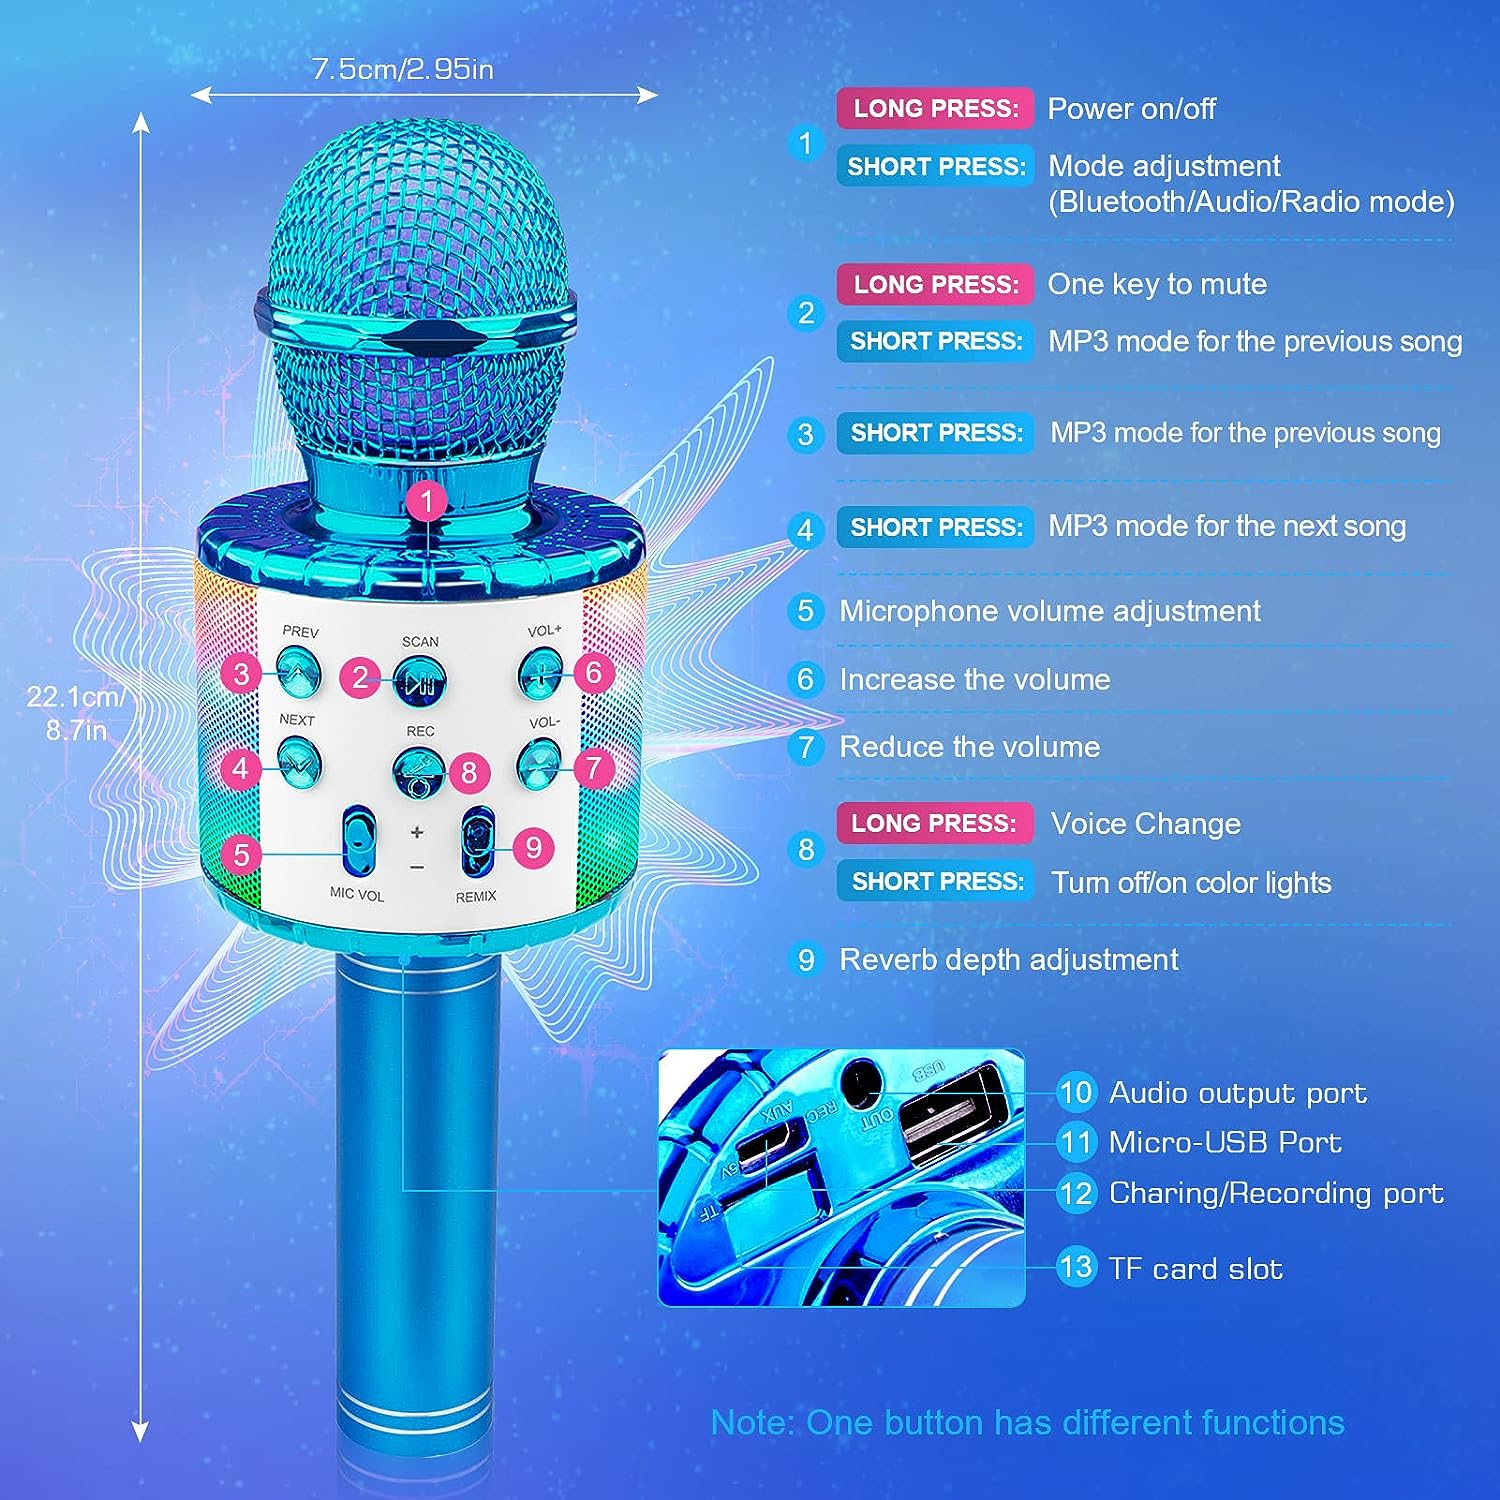 Paquete de 2 micrófonos inalámbricos Bluetooth para karaoke, 5 en 1, portátil,